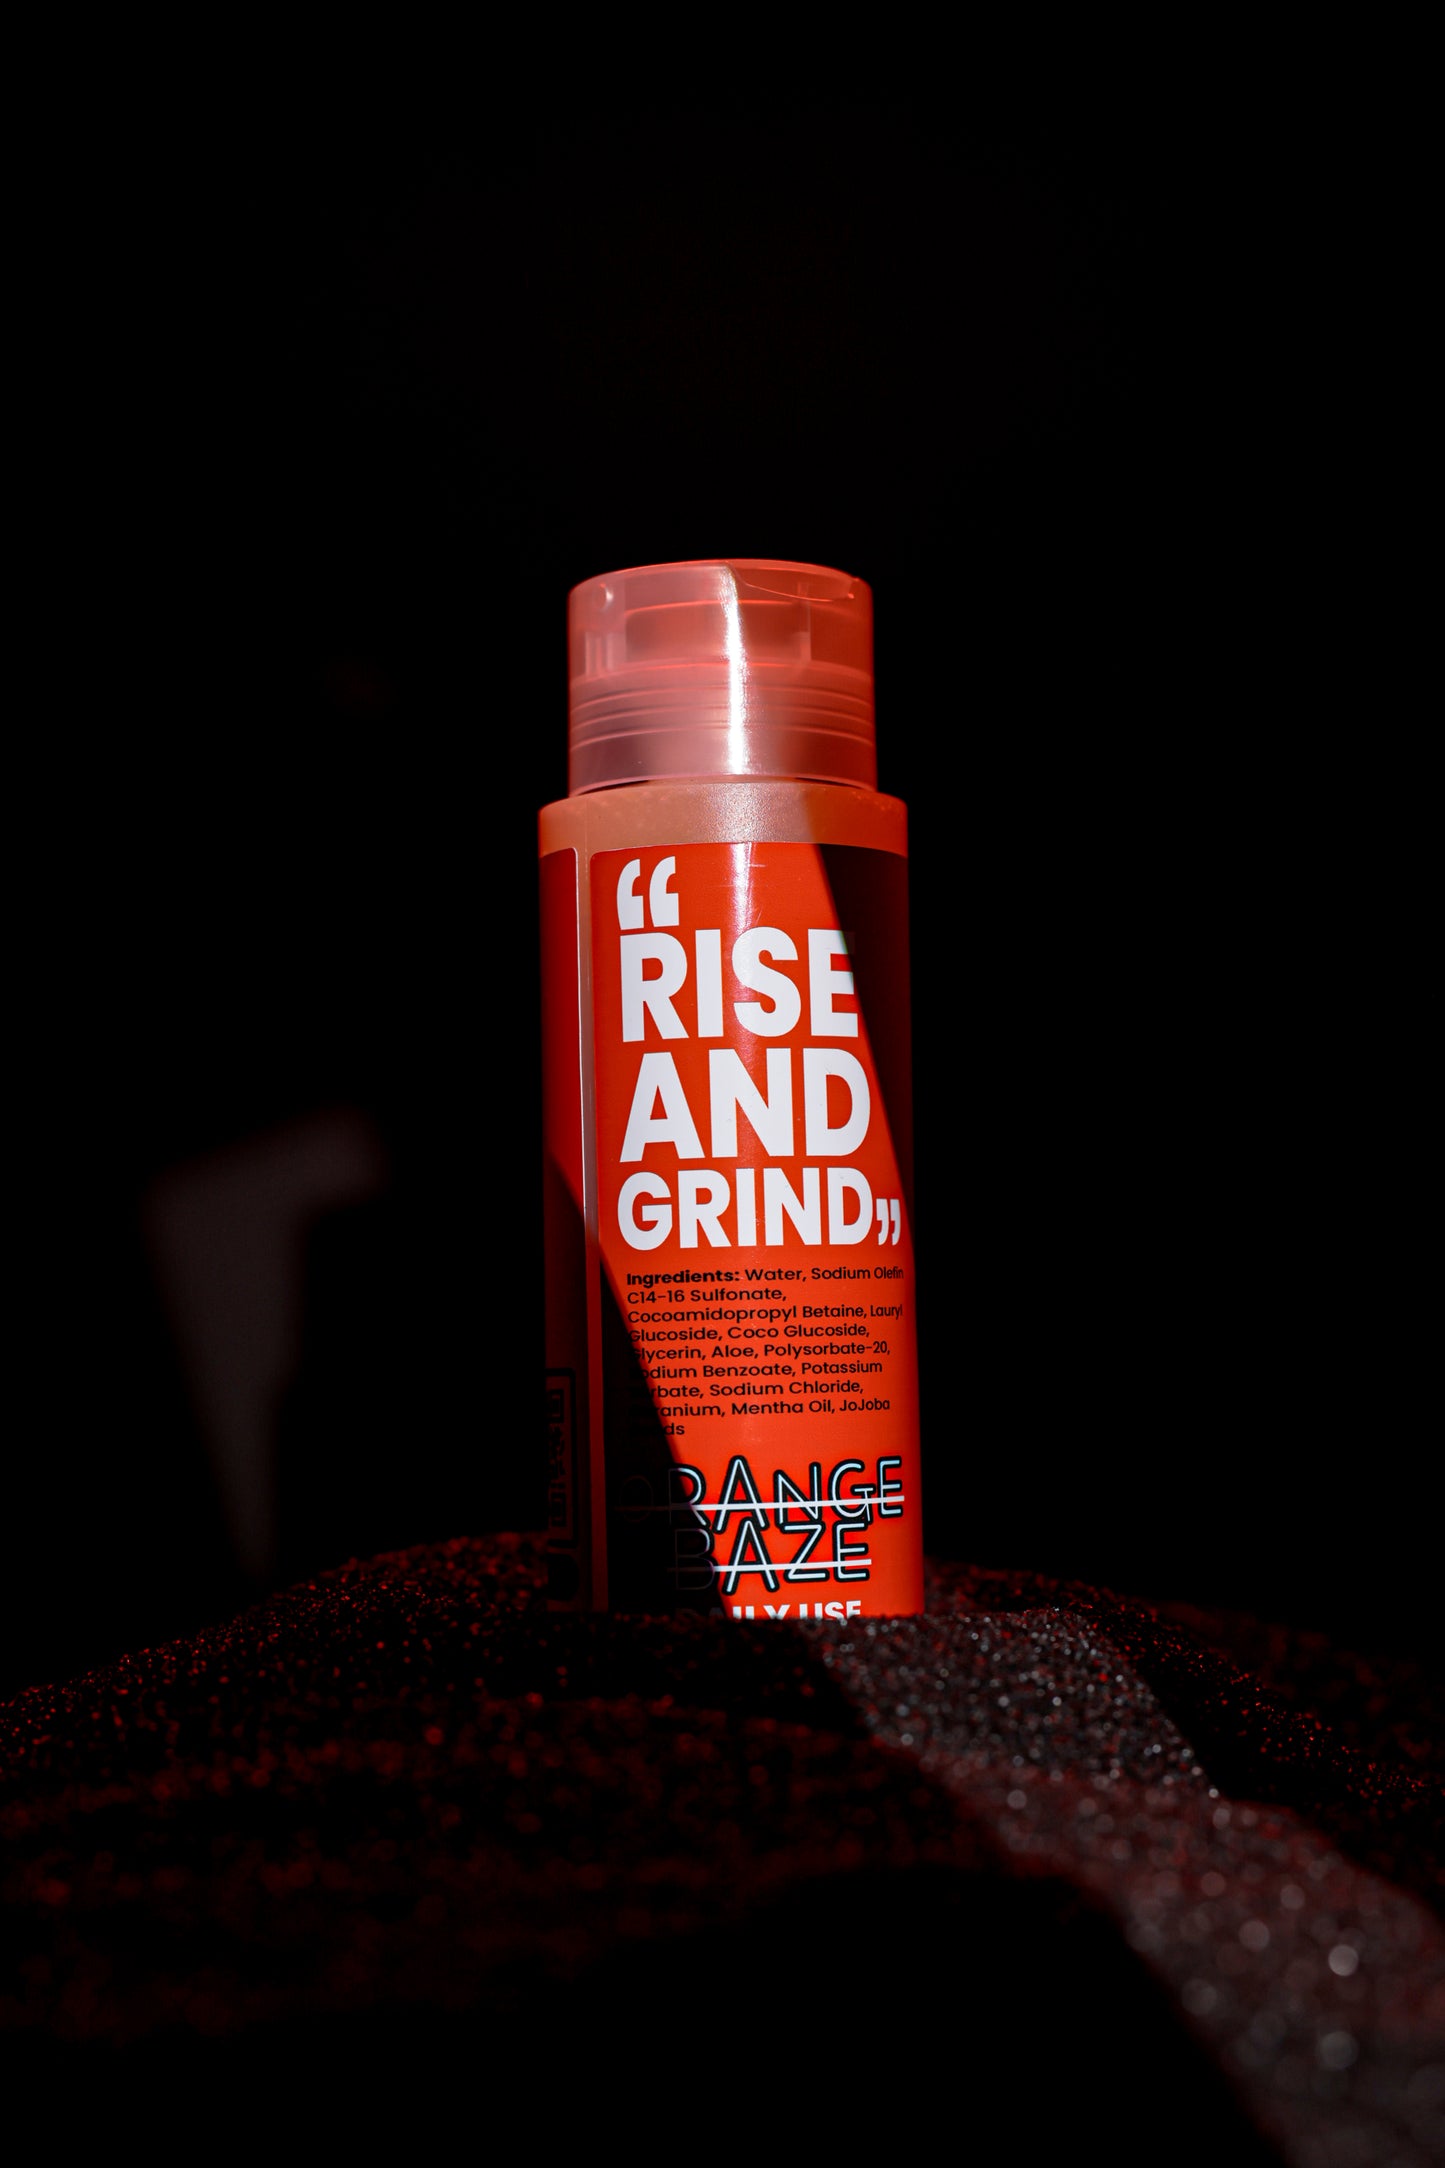 "Rise & Grind" Baze Body Wash